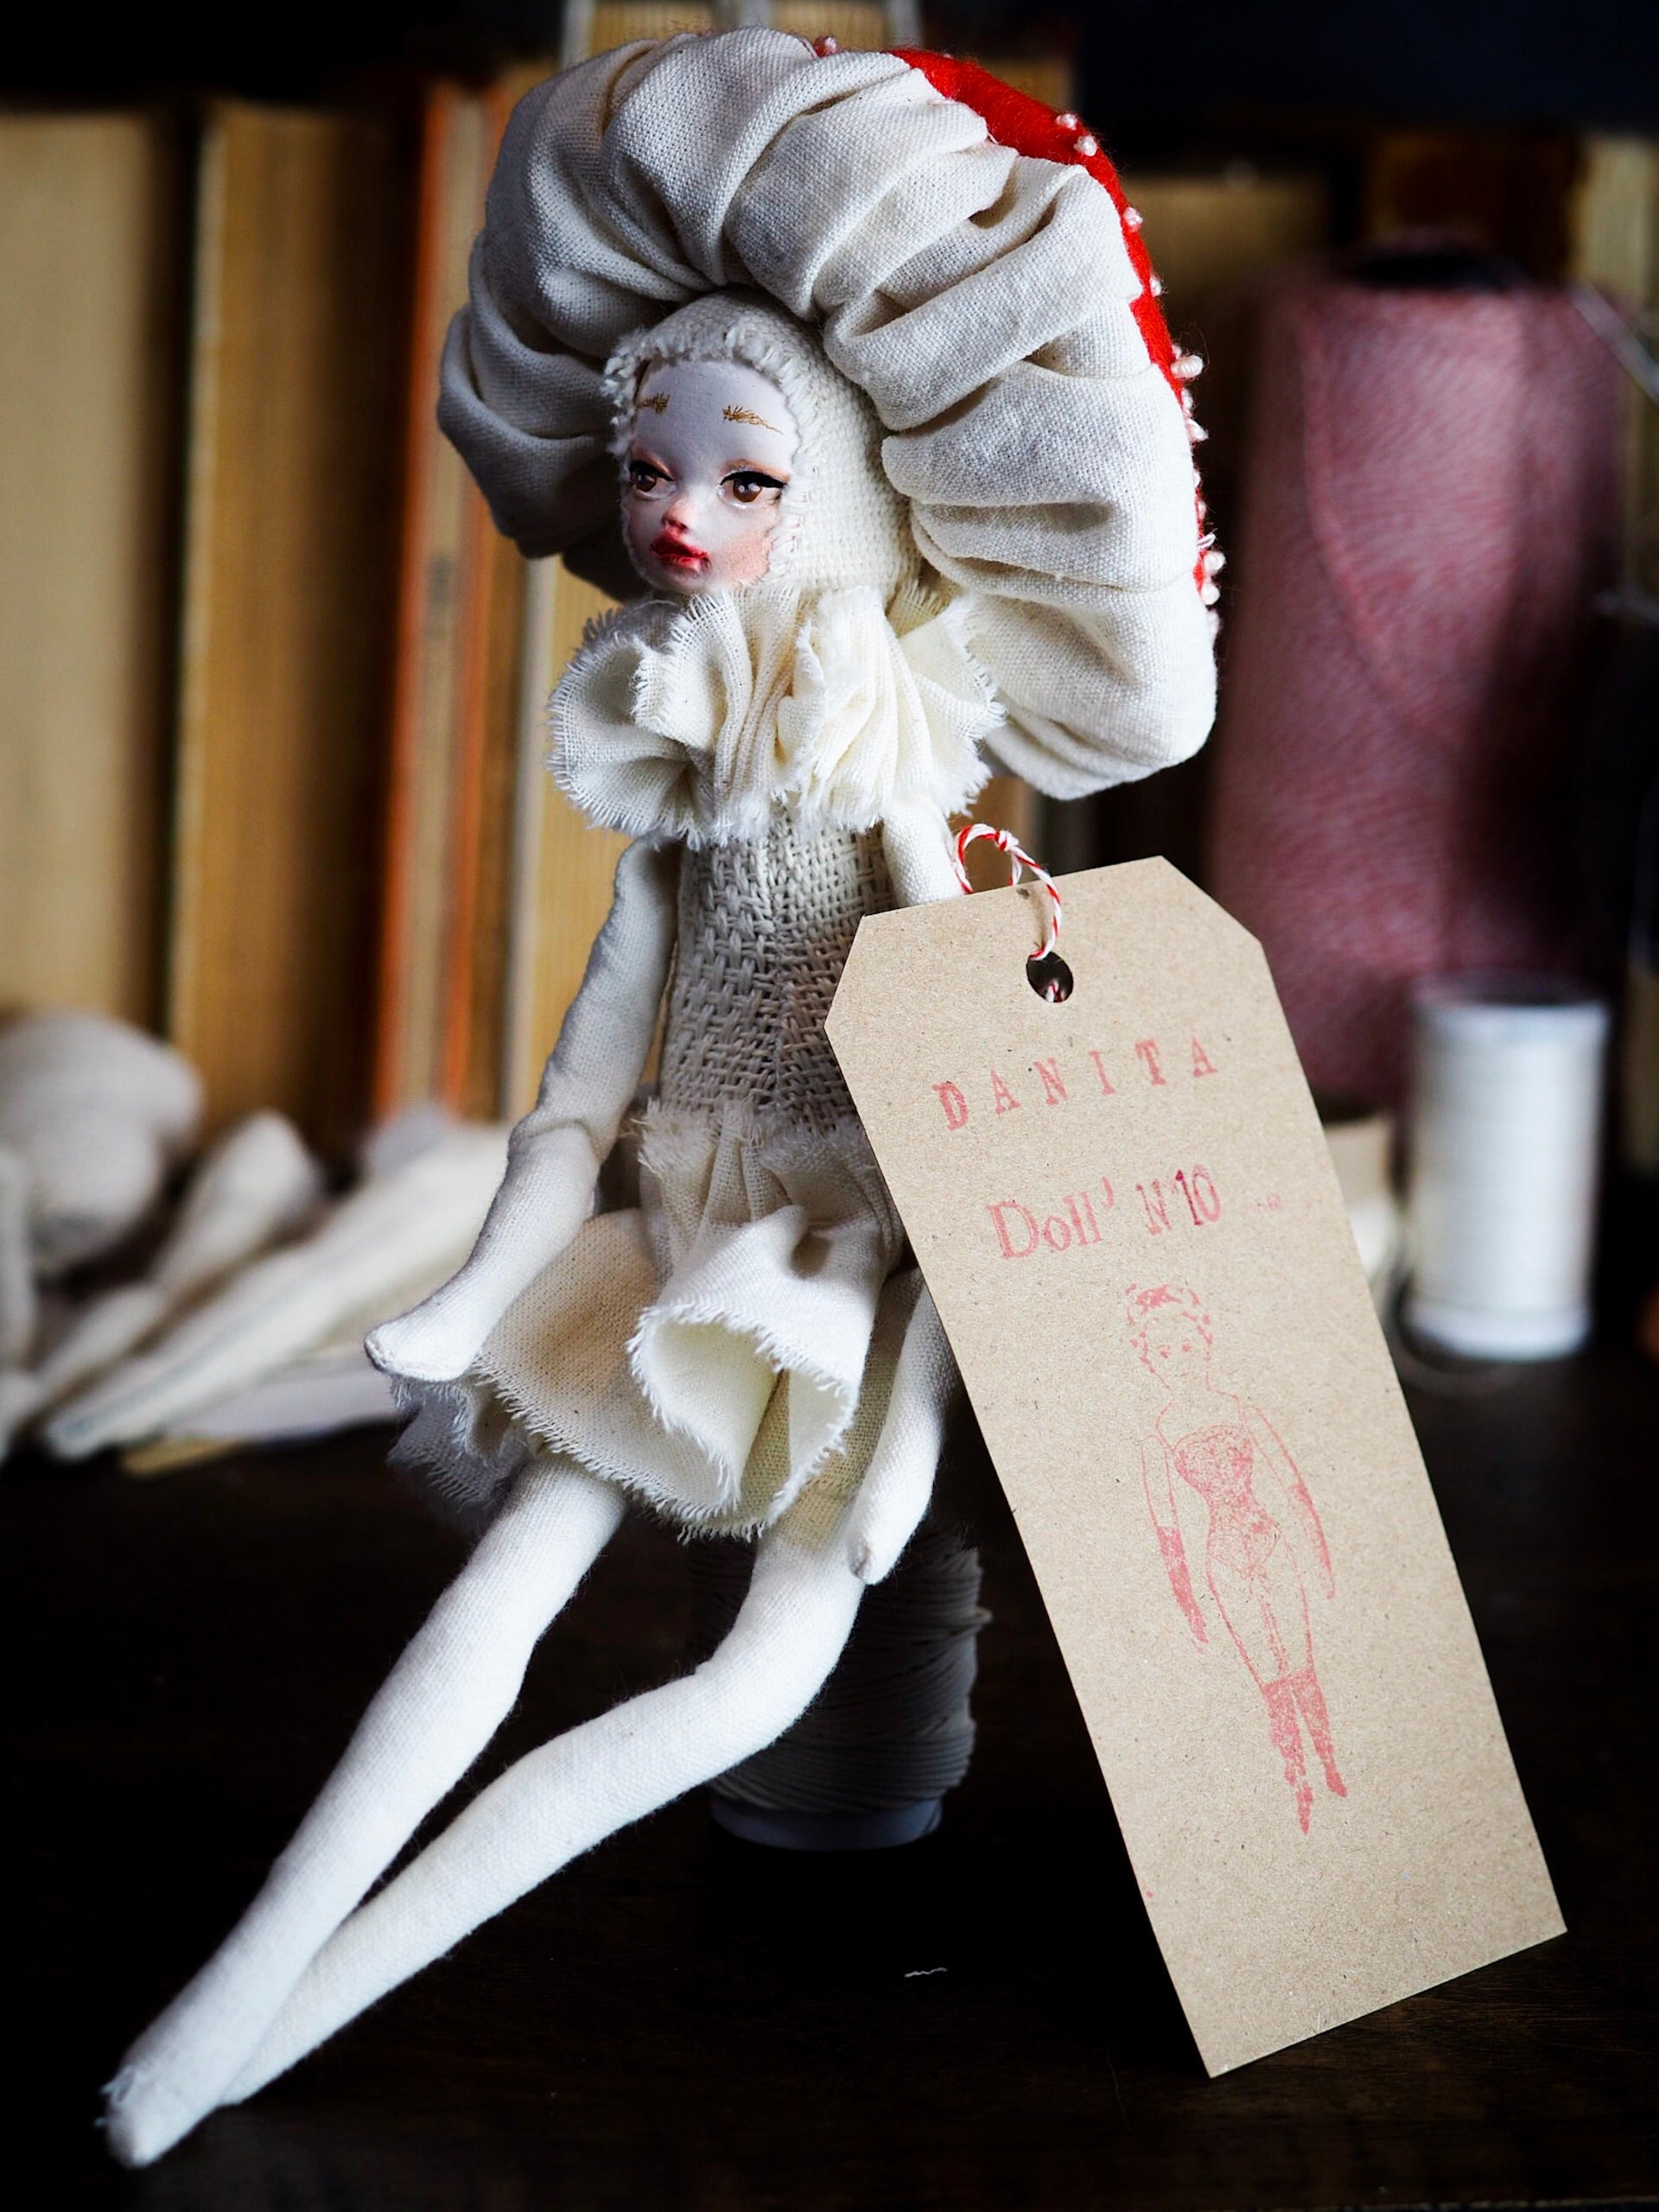 MUSHROOM SPECIMEN N. 10 - Original woodlands handmade art doll by Danita Art, Art Doll by Danita Art